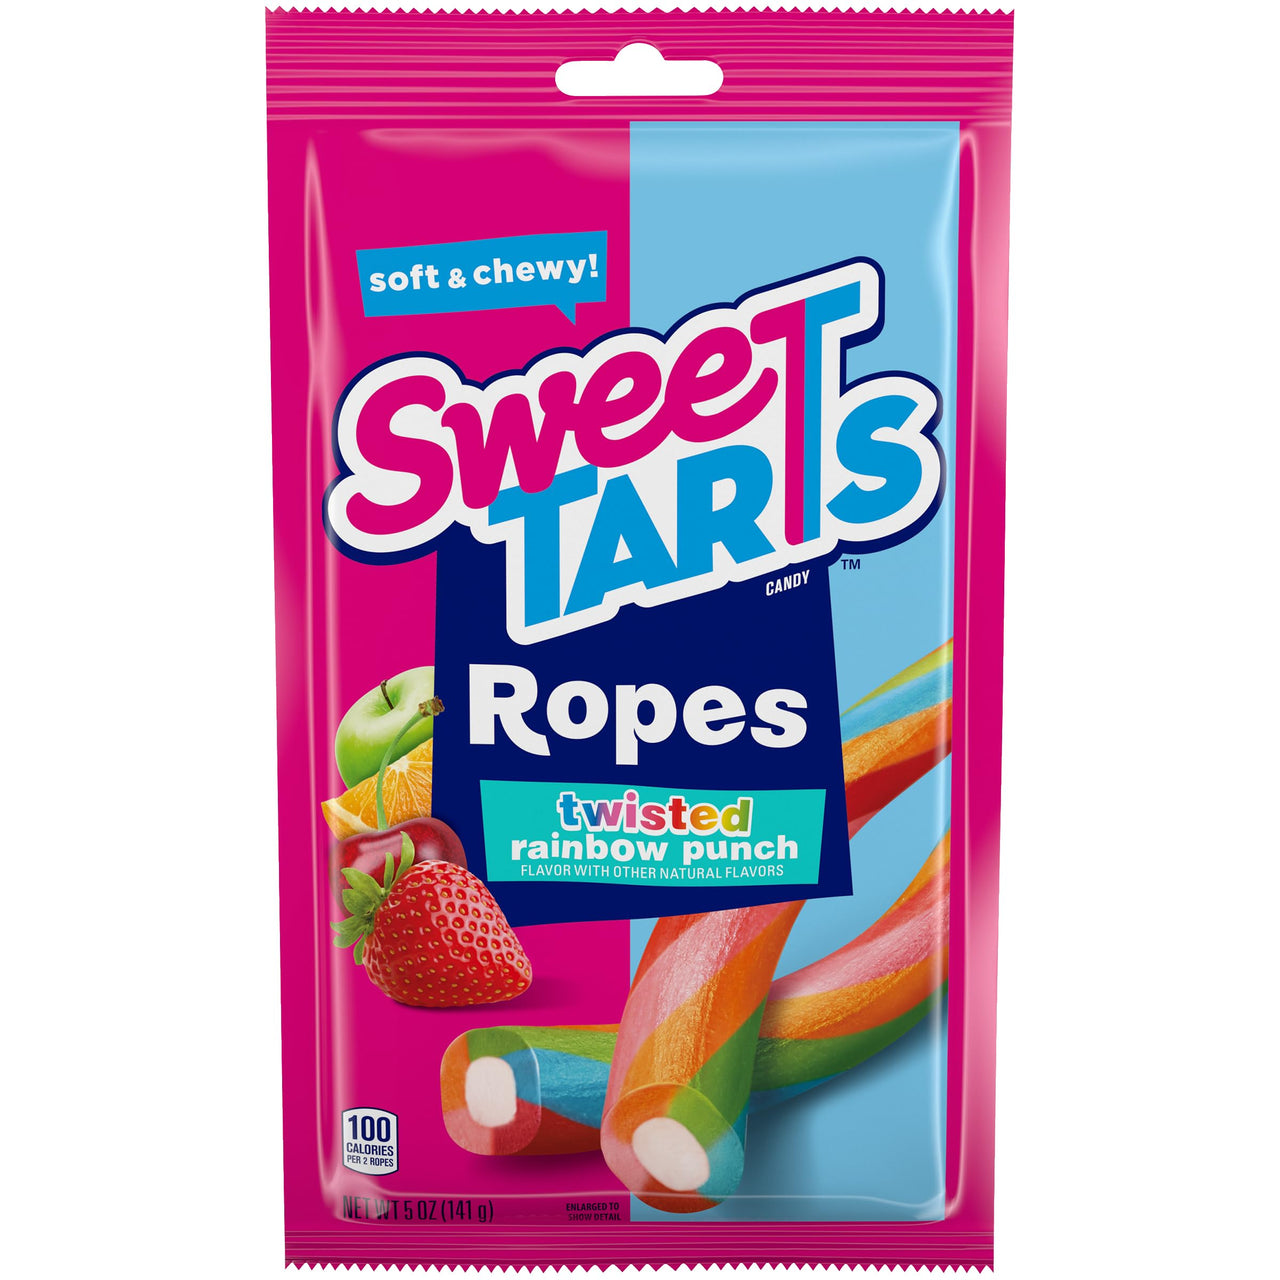 Sweet Tarts Ropes Twisted Rainbow Punch